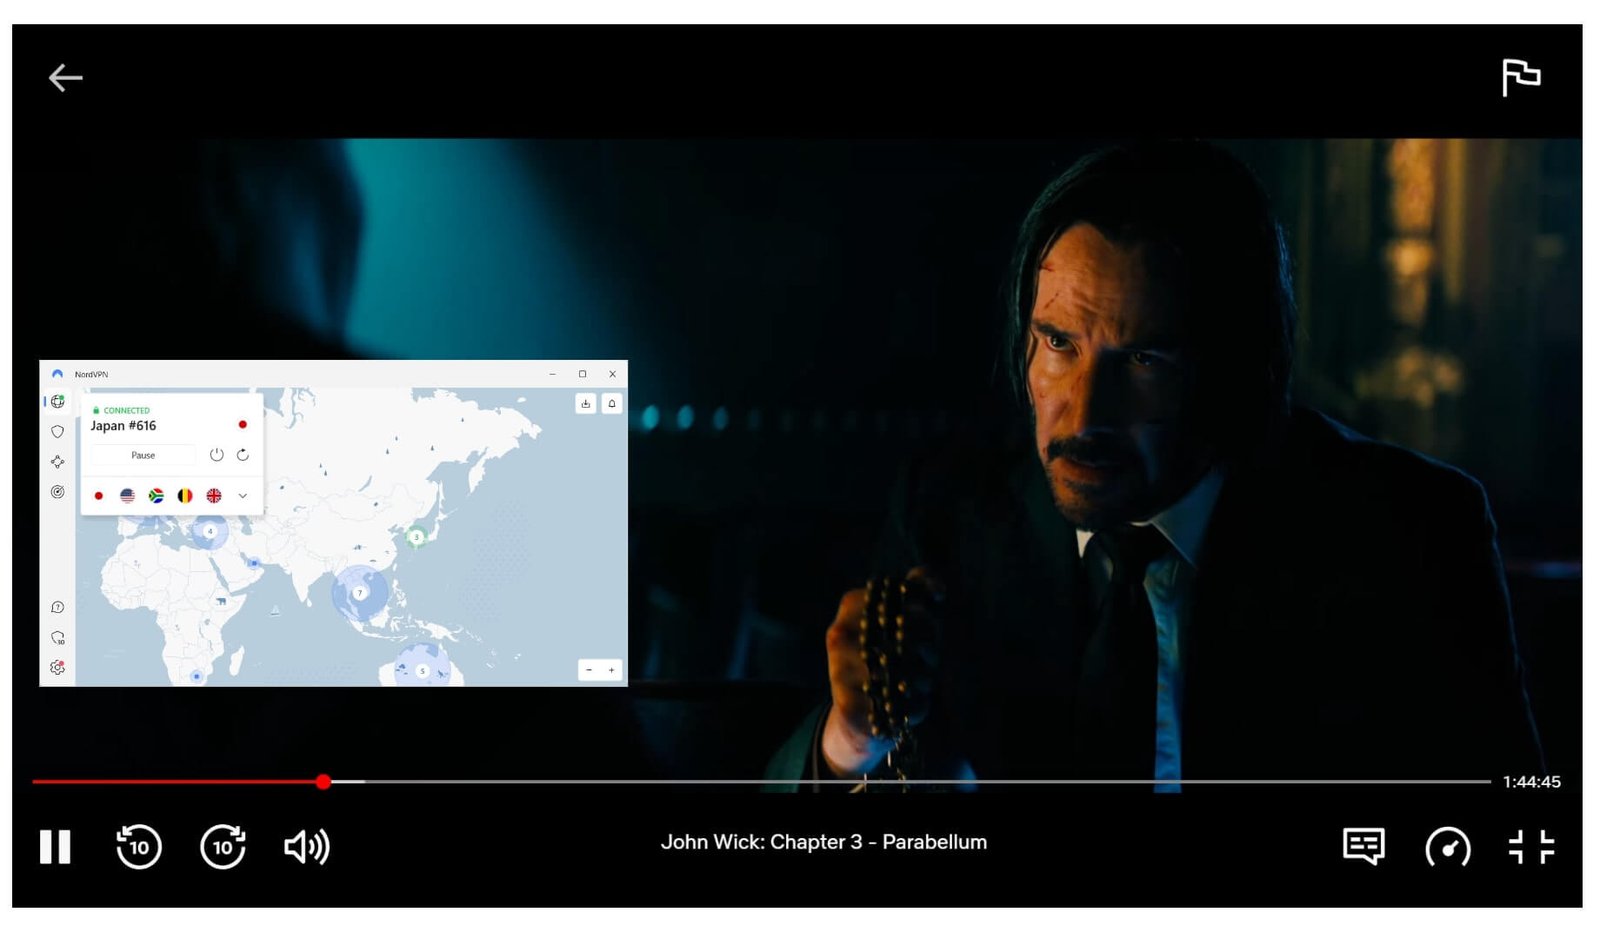 John Wick 3 on Netflix Japan using NordVPN